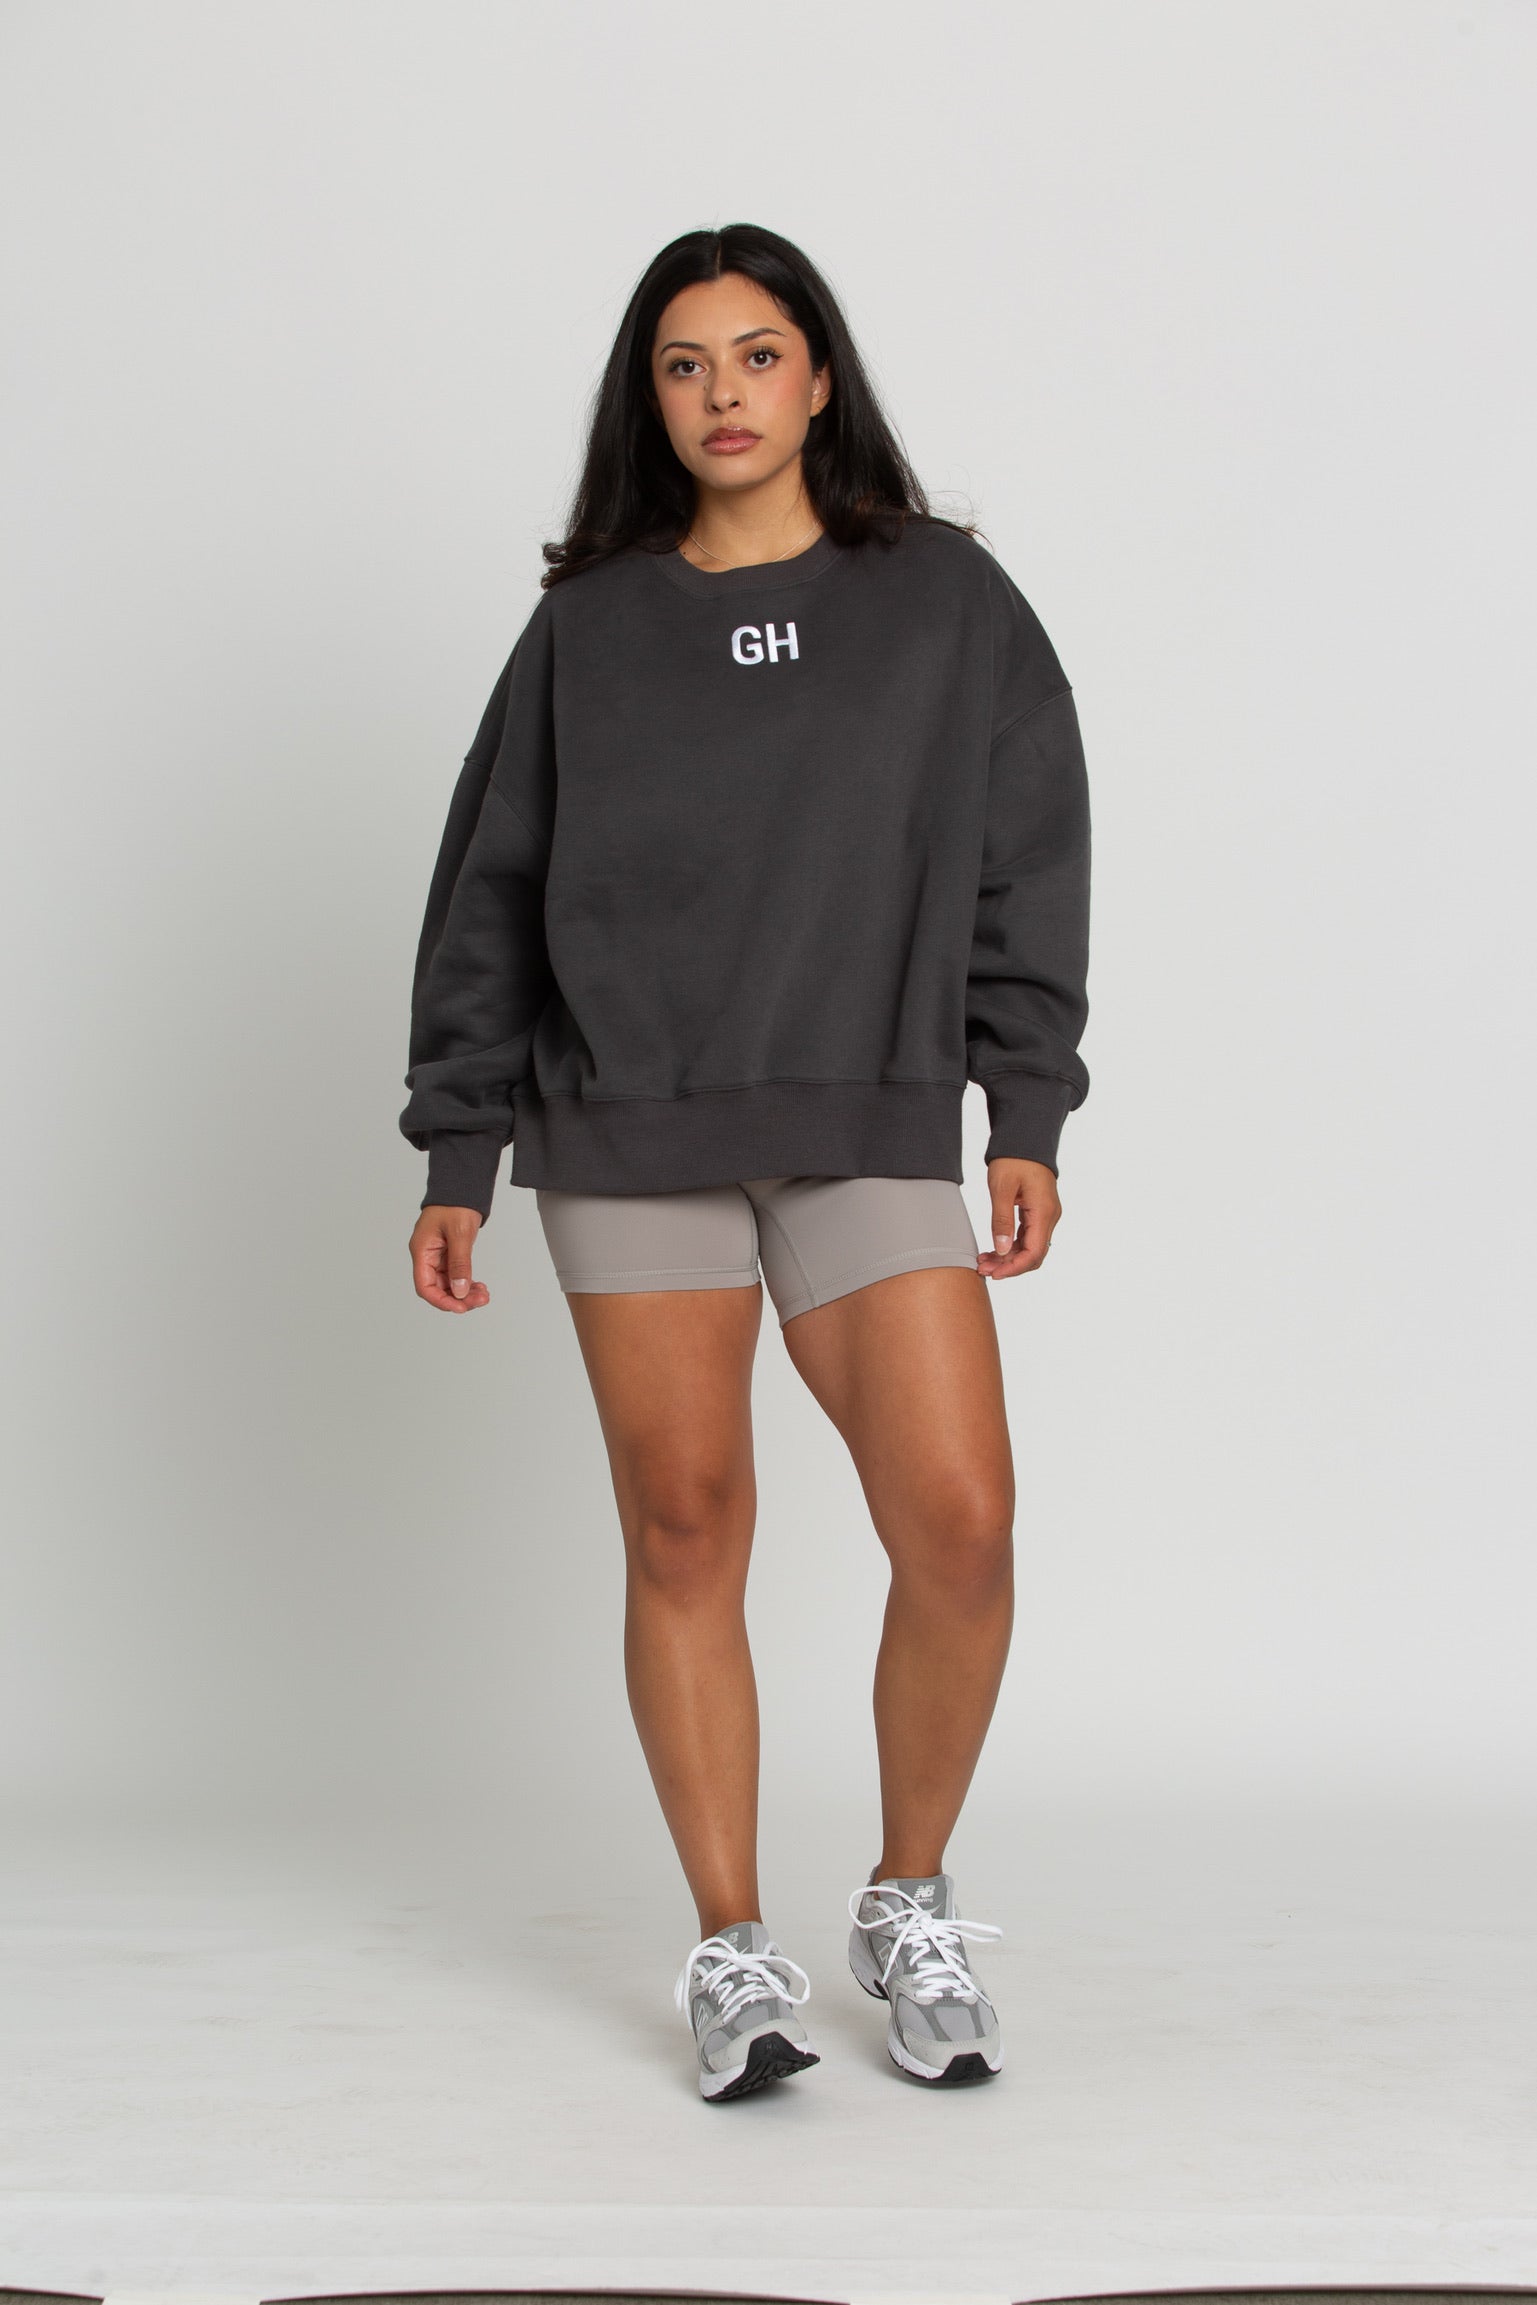 Off-Black GH Embroidered Sweatshirt